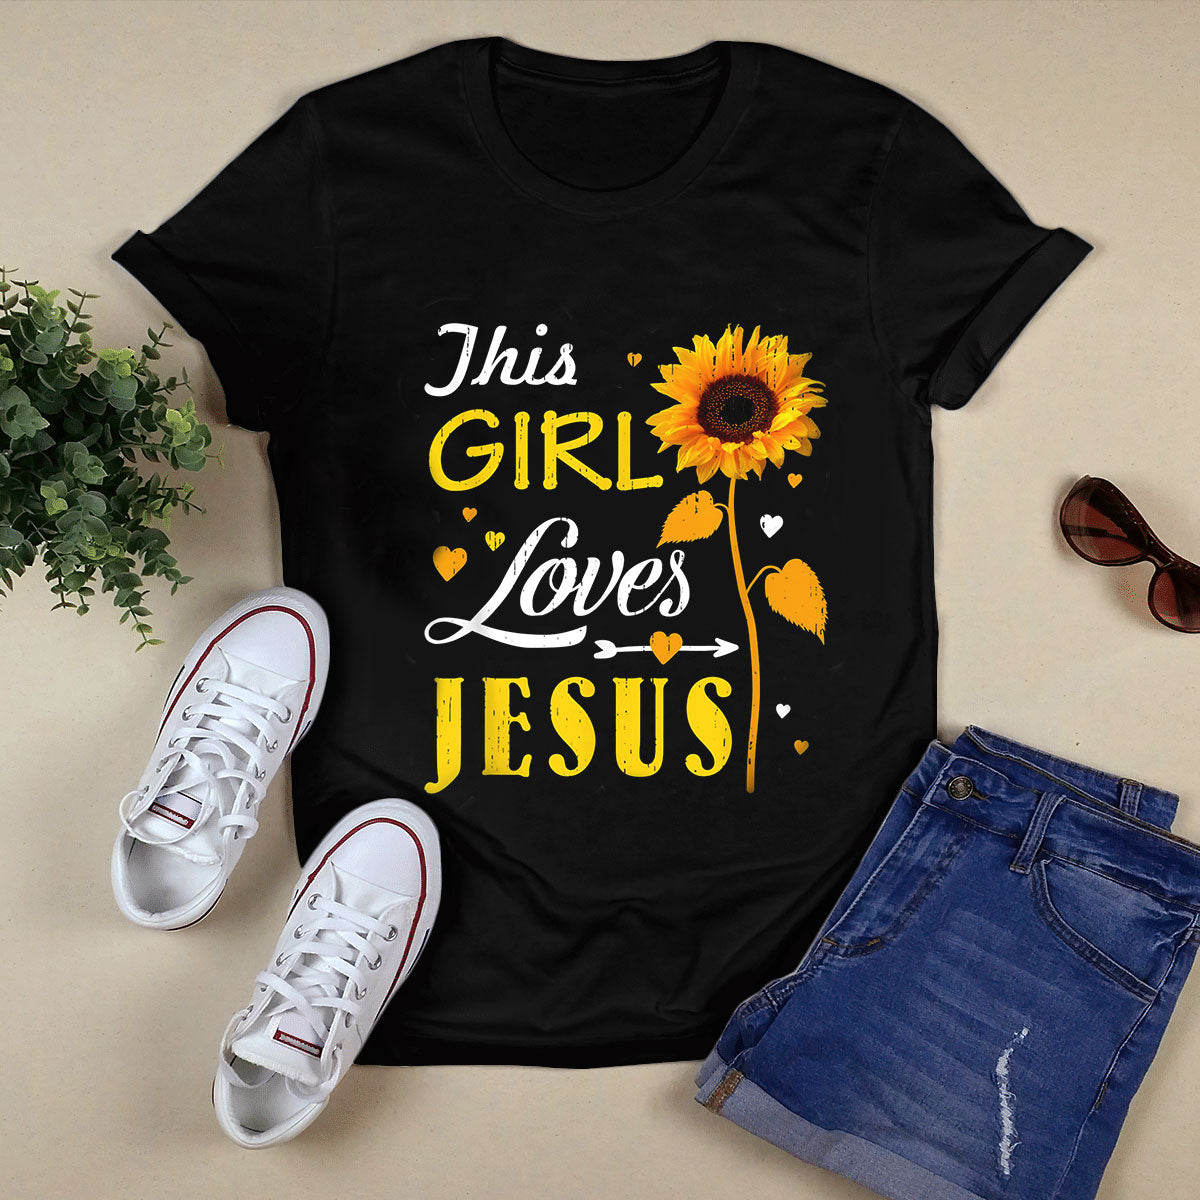 I Love Jesus Black T-Shirt T